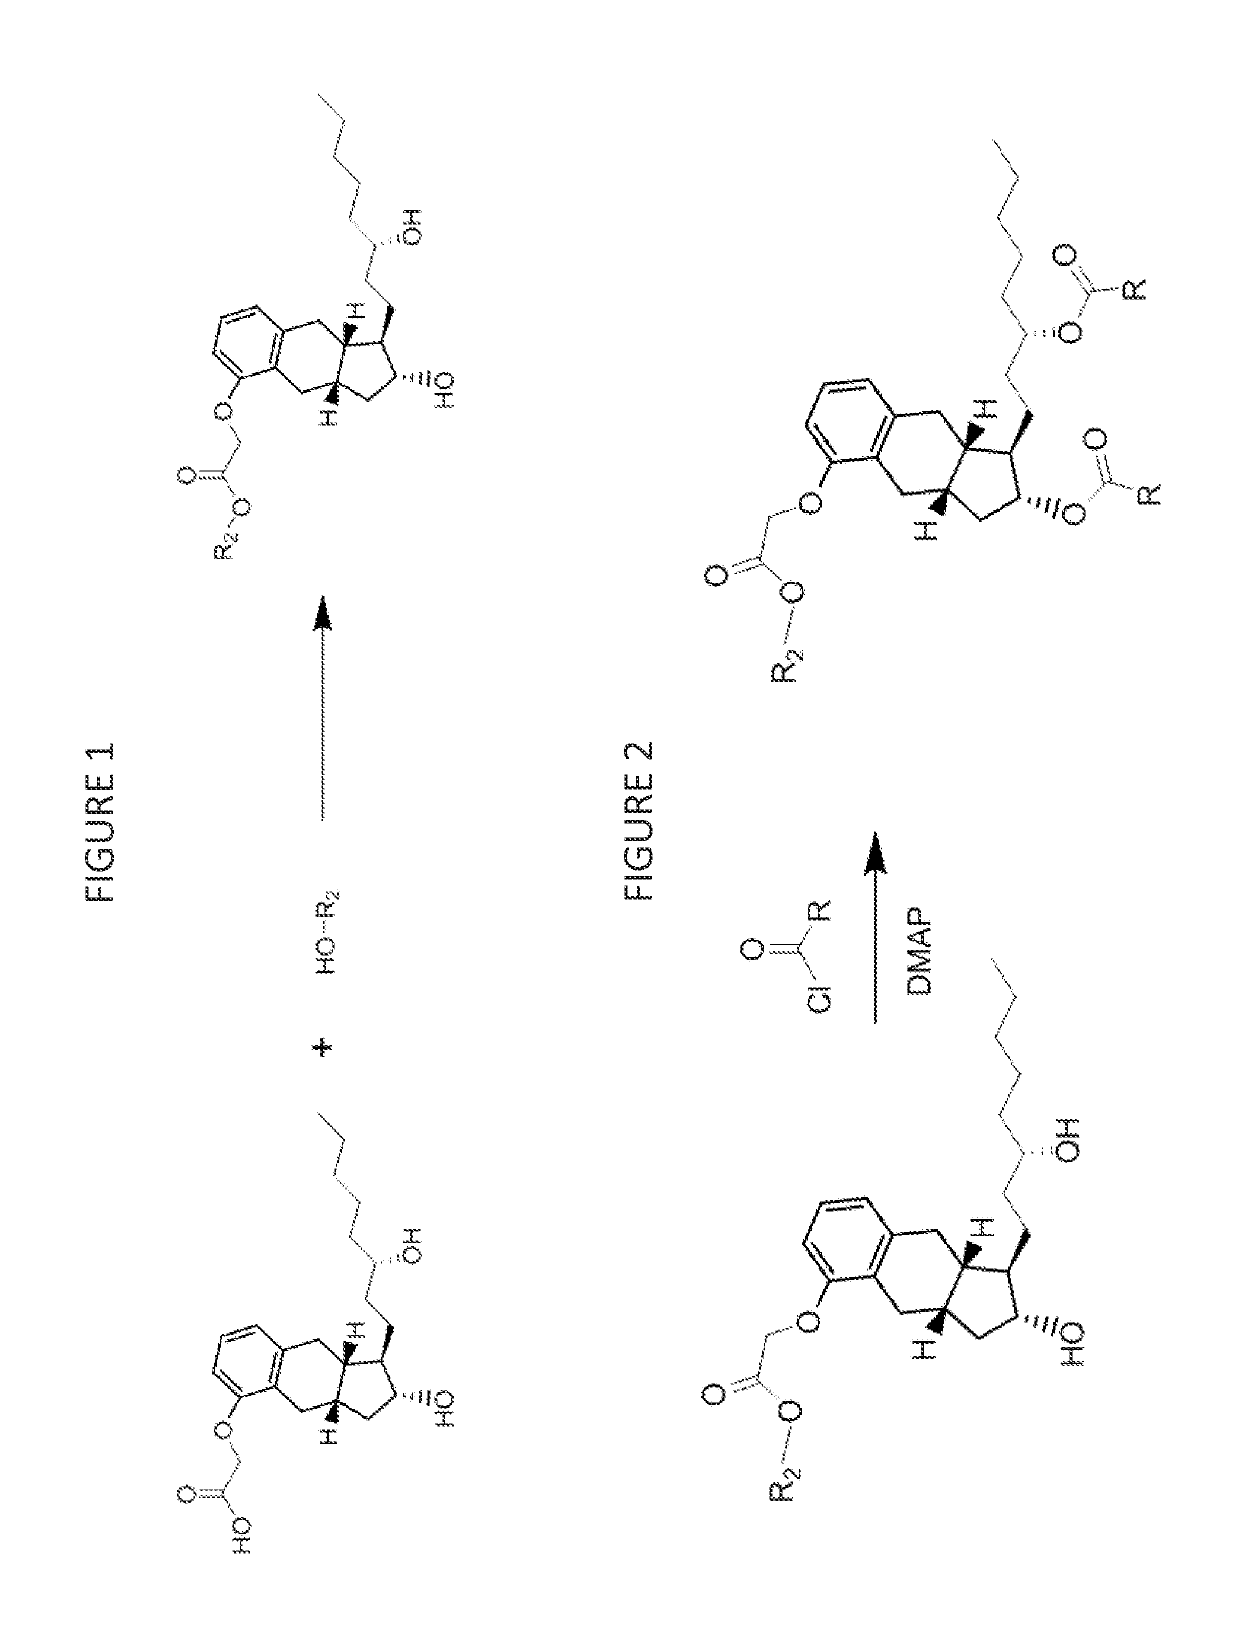 Methods of manufacturing treprostinil and treprostinil derivative prodrugs